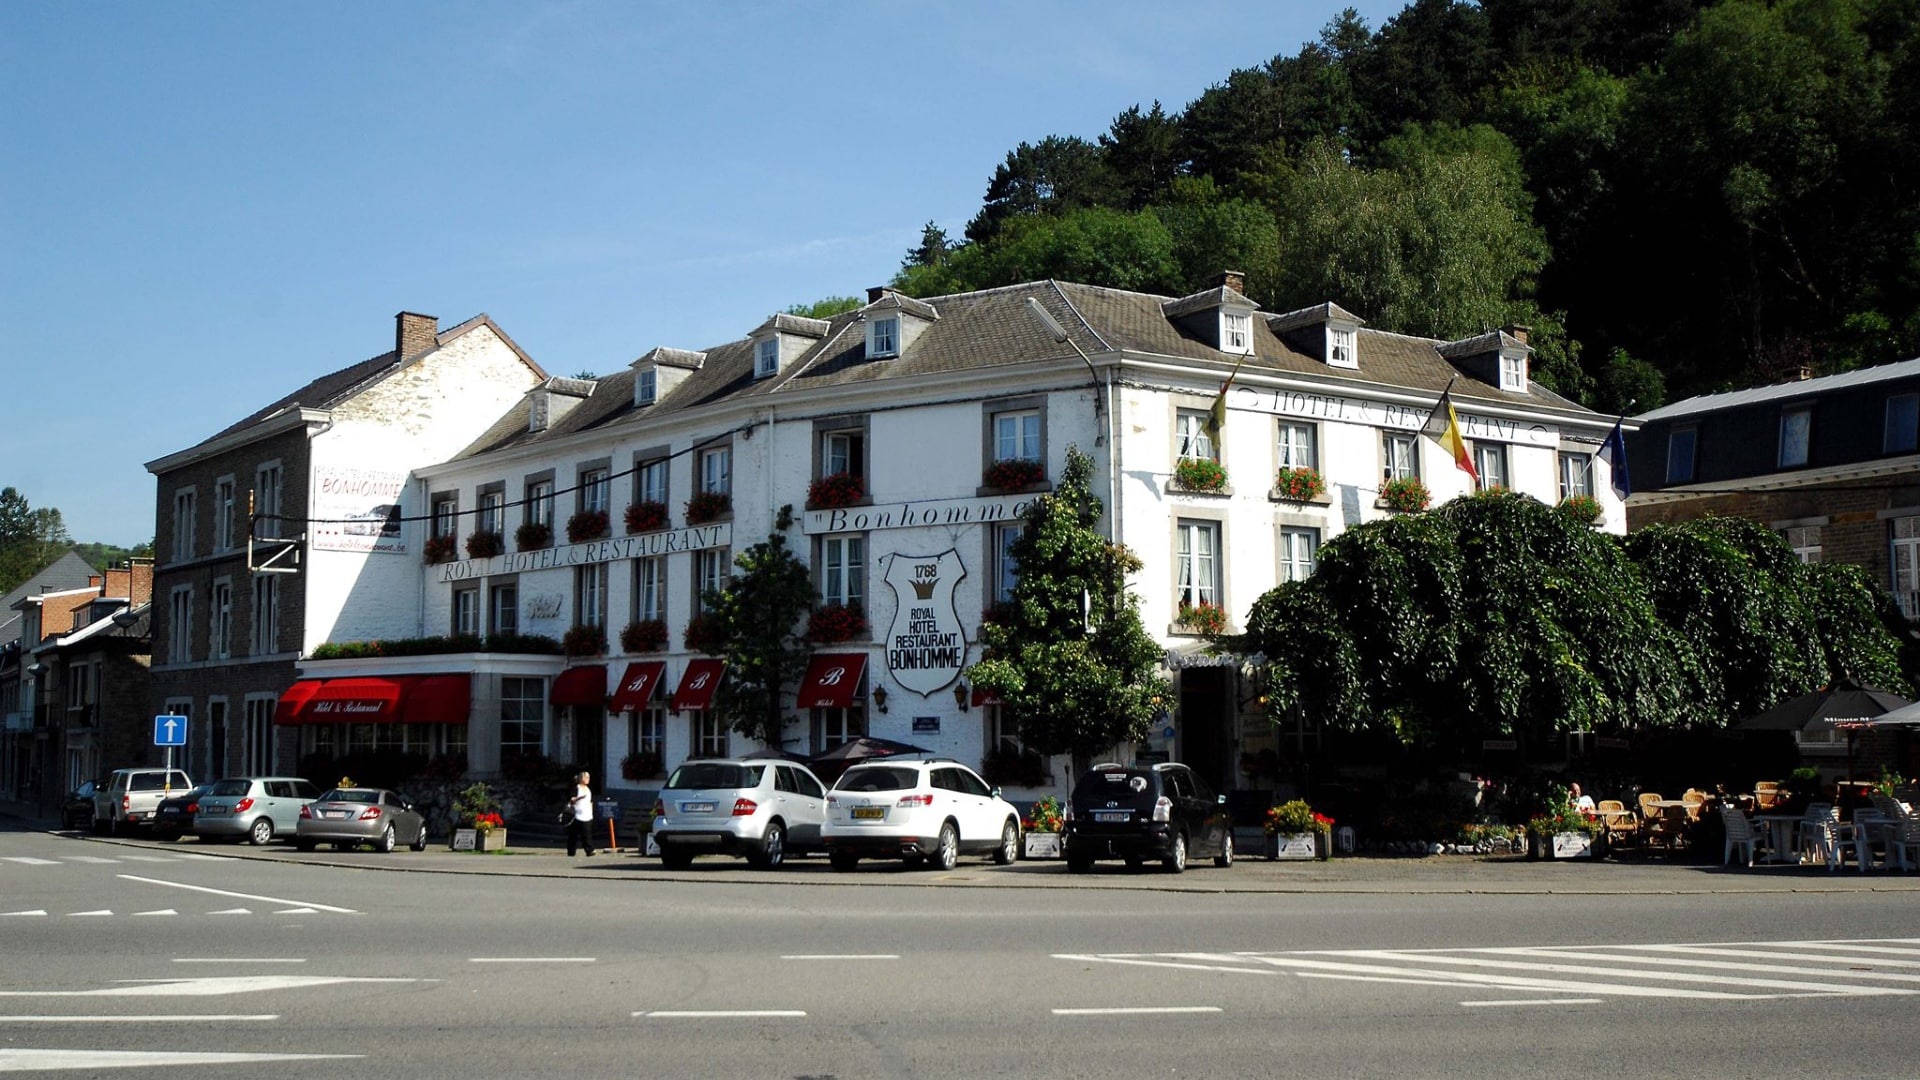 Hotel Bonhomme, het oudste hotel van België